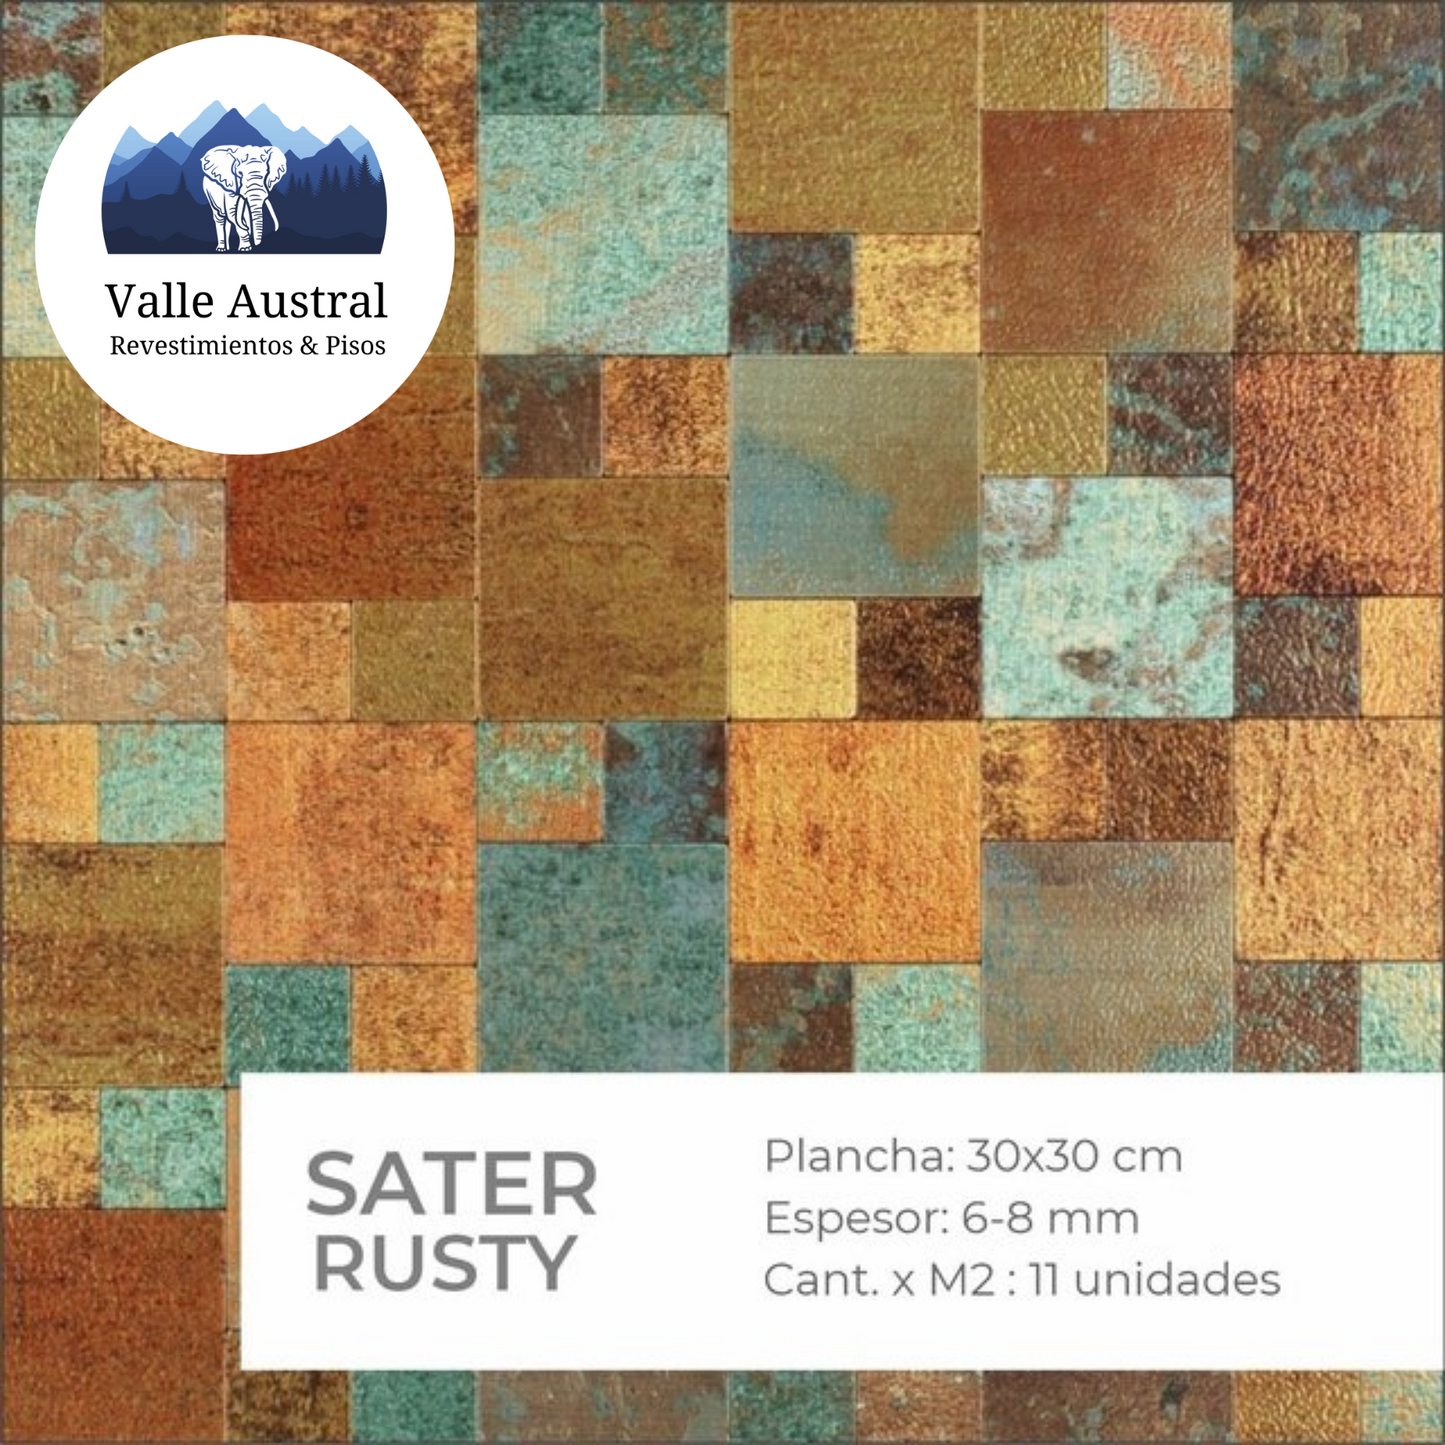 Sater Rusty - PAL1504 - 1era